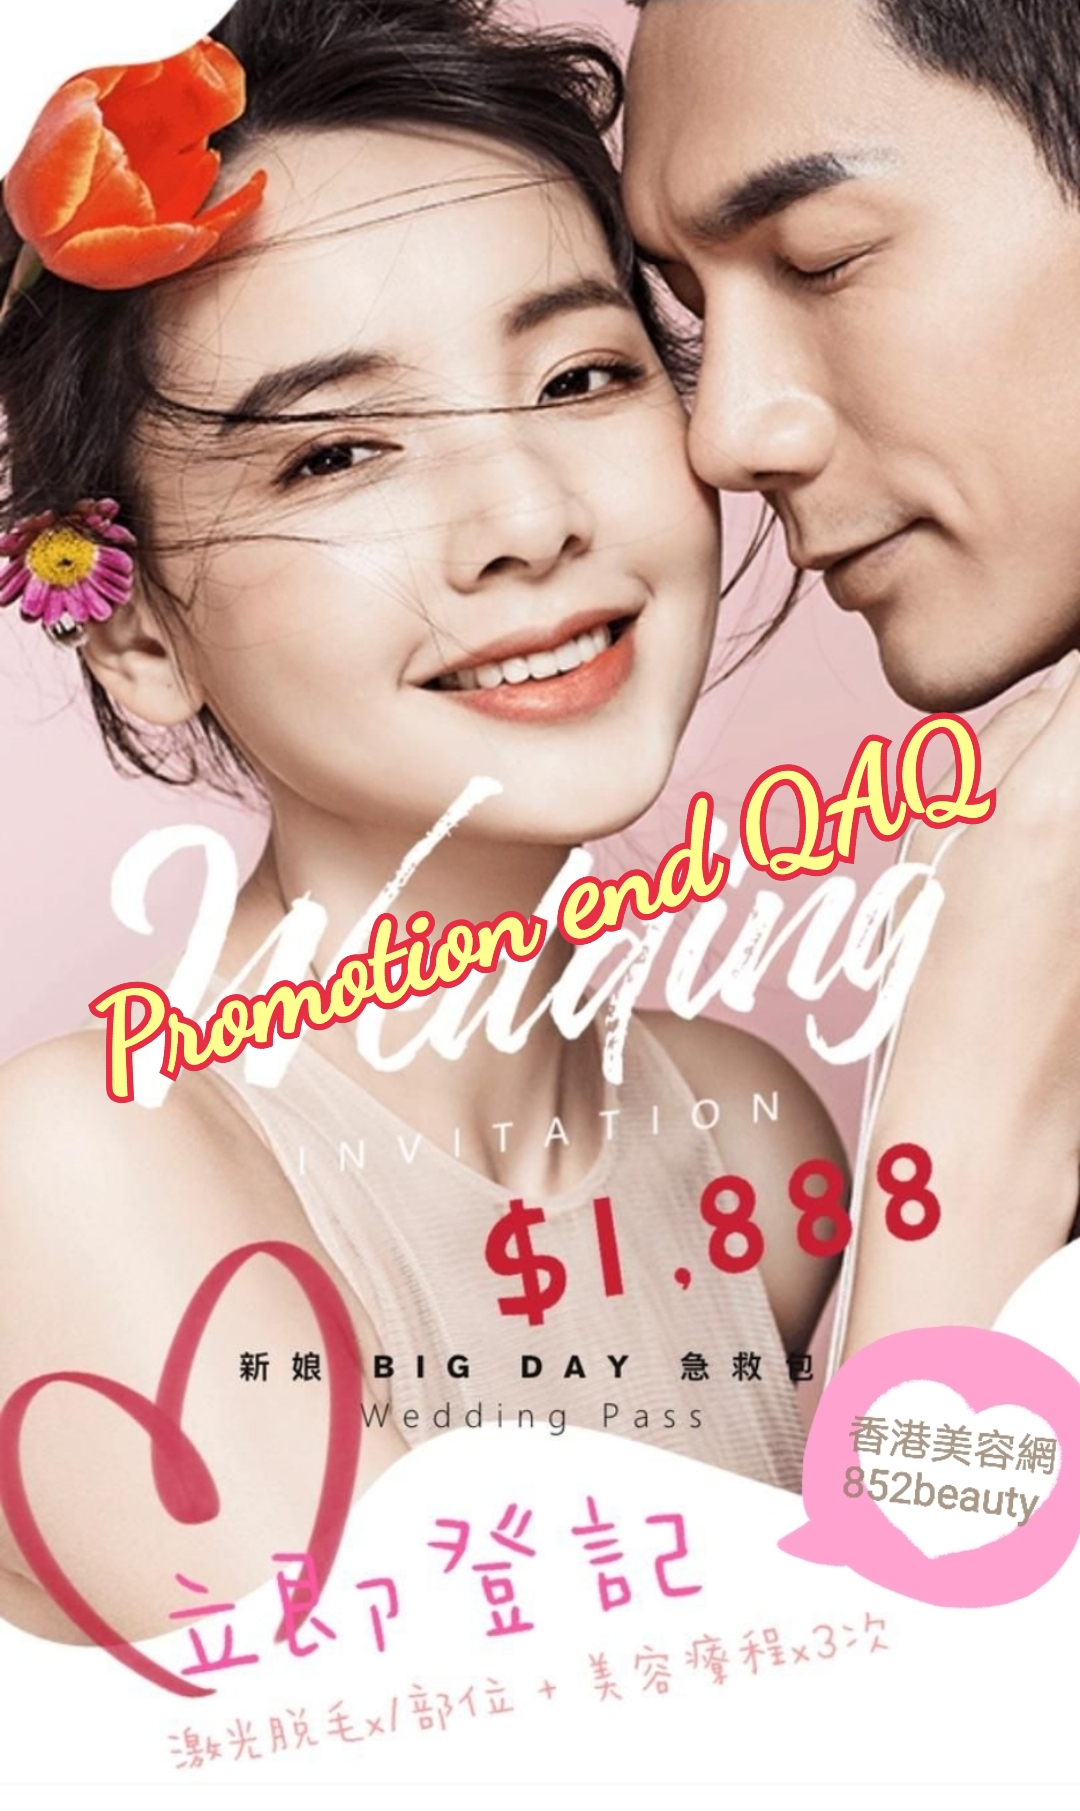 Hong Kong Beauty Salon Latest Beauty Discount: 美容優惠 - 荔枝角區] 新娘 Big Day 1888優惠 